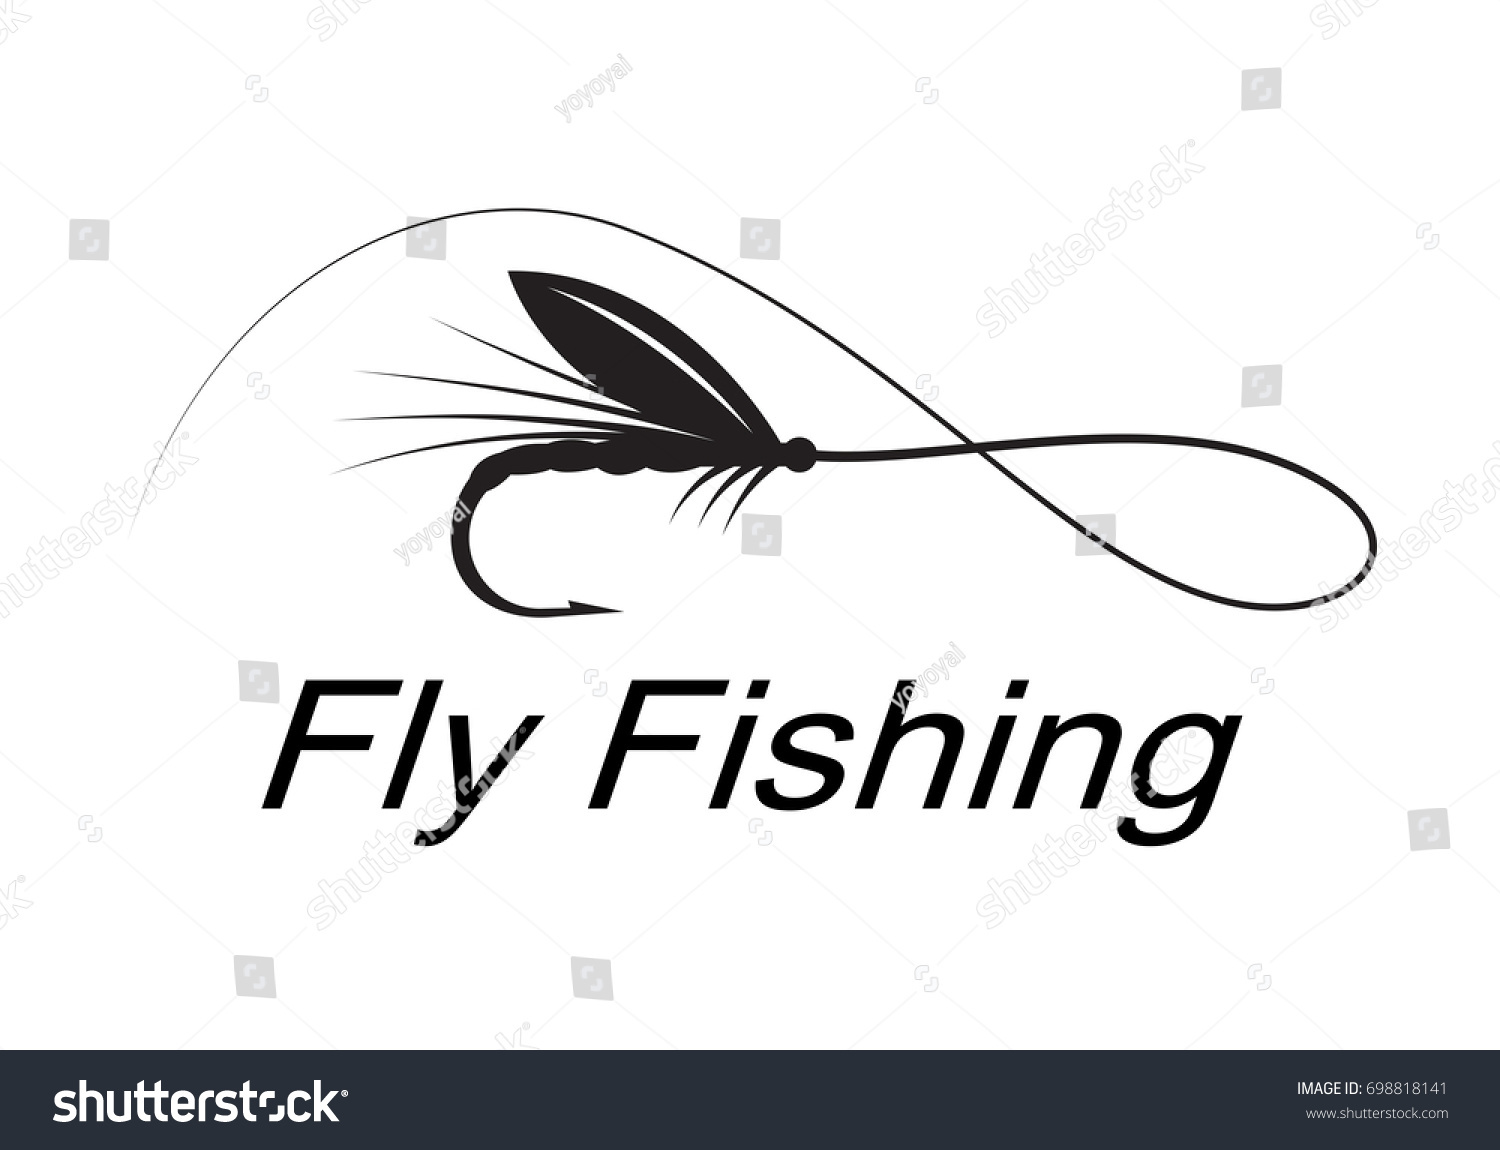 Download Graphic Fly Fishing Vector Stock Vector 698818141 - Shutterstock